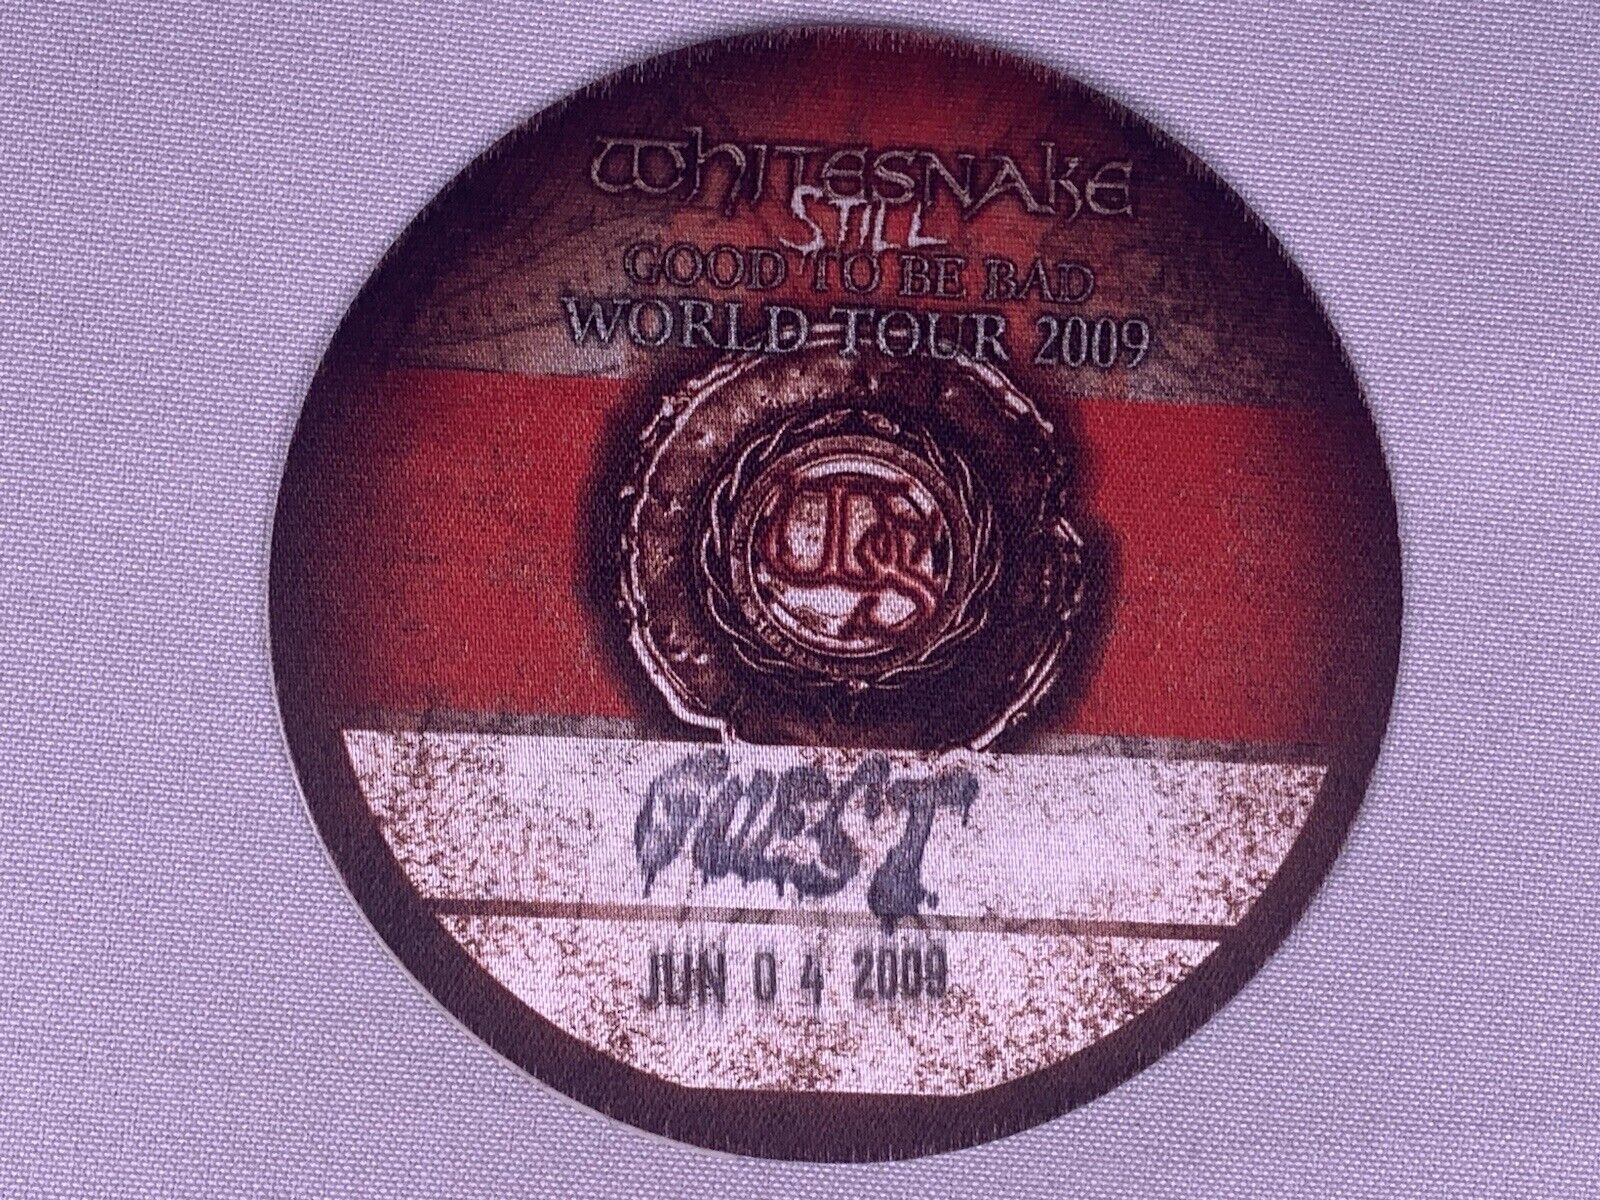 Whitesnake Ticket Pass Vintage Original Good To Be Bad Tour Paris 2009